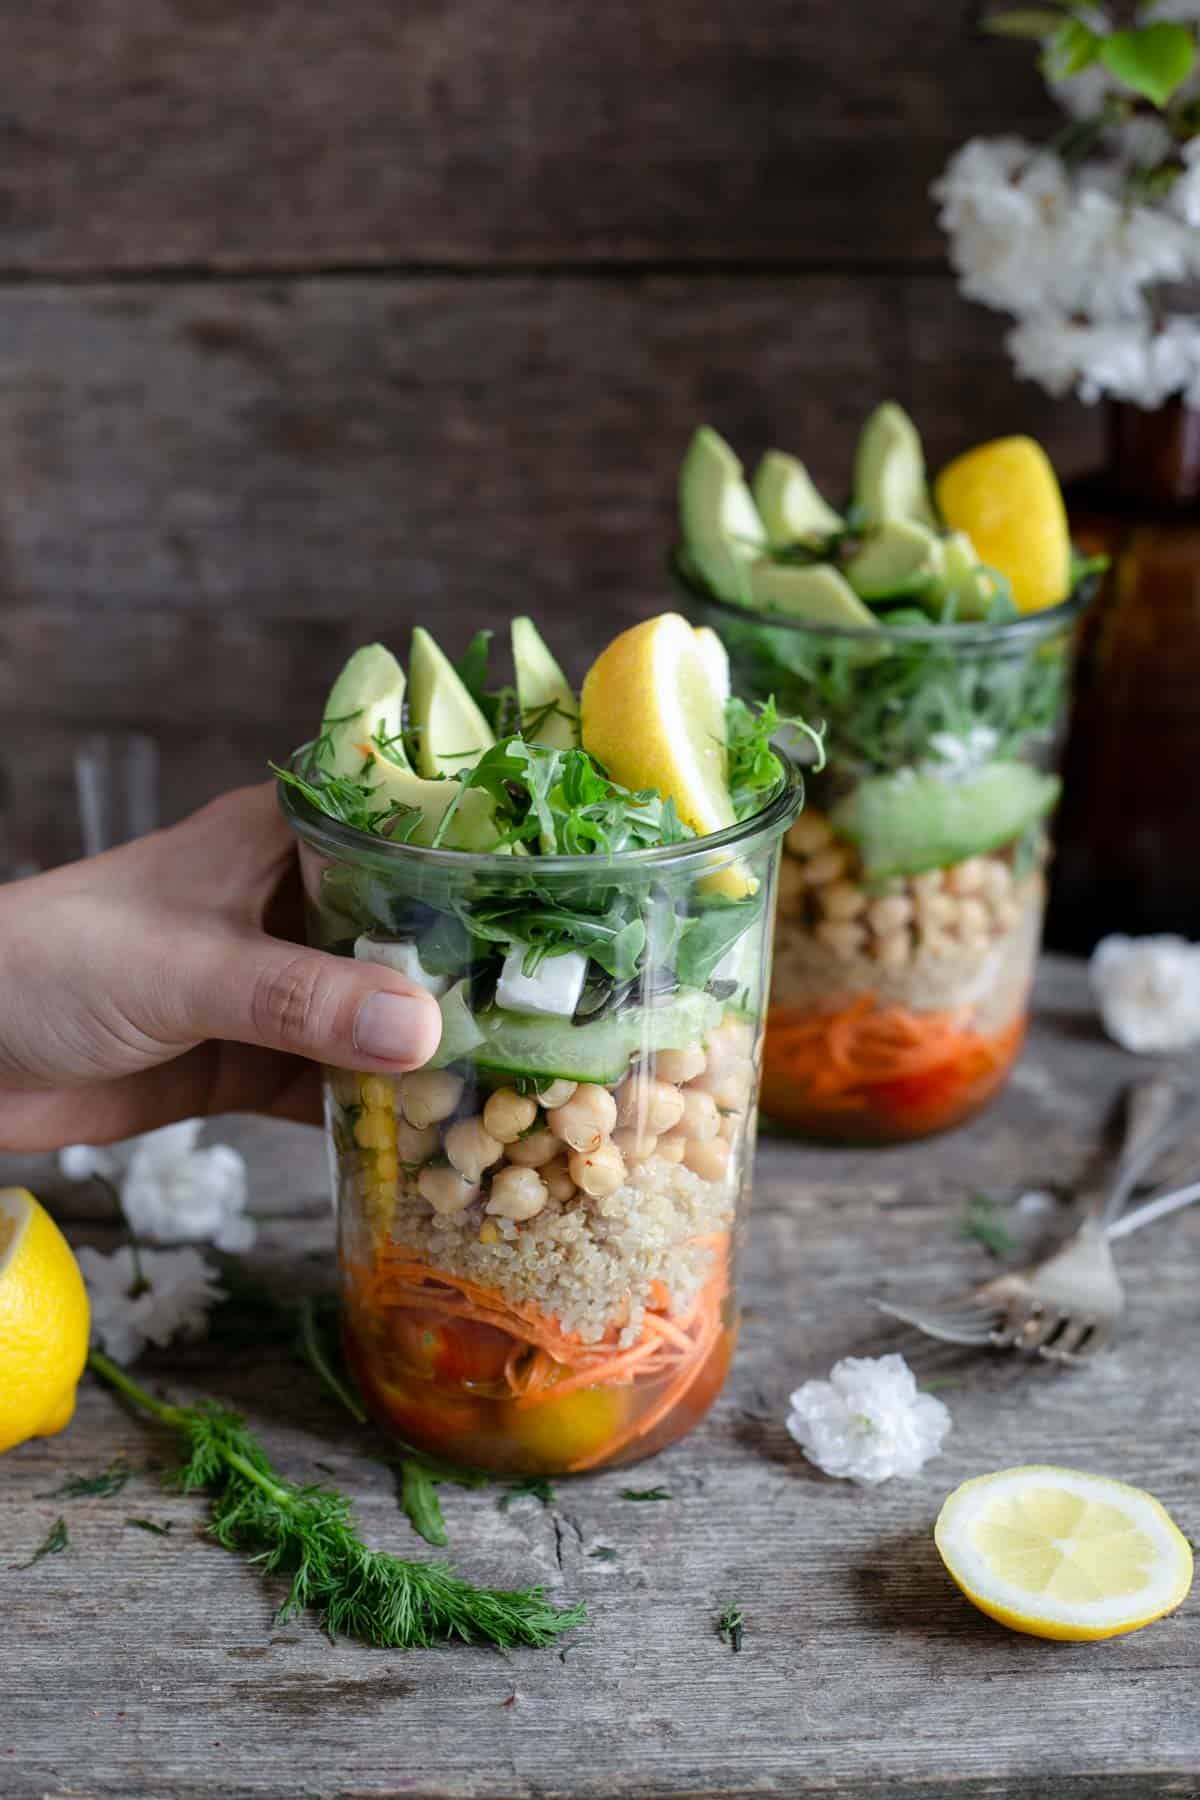 Tomato and quinoa salad jars. Easy and fun way to prepare your work lunch! #dairyfree #veganrecipe #saladjar | via @annabanana.co